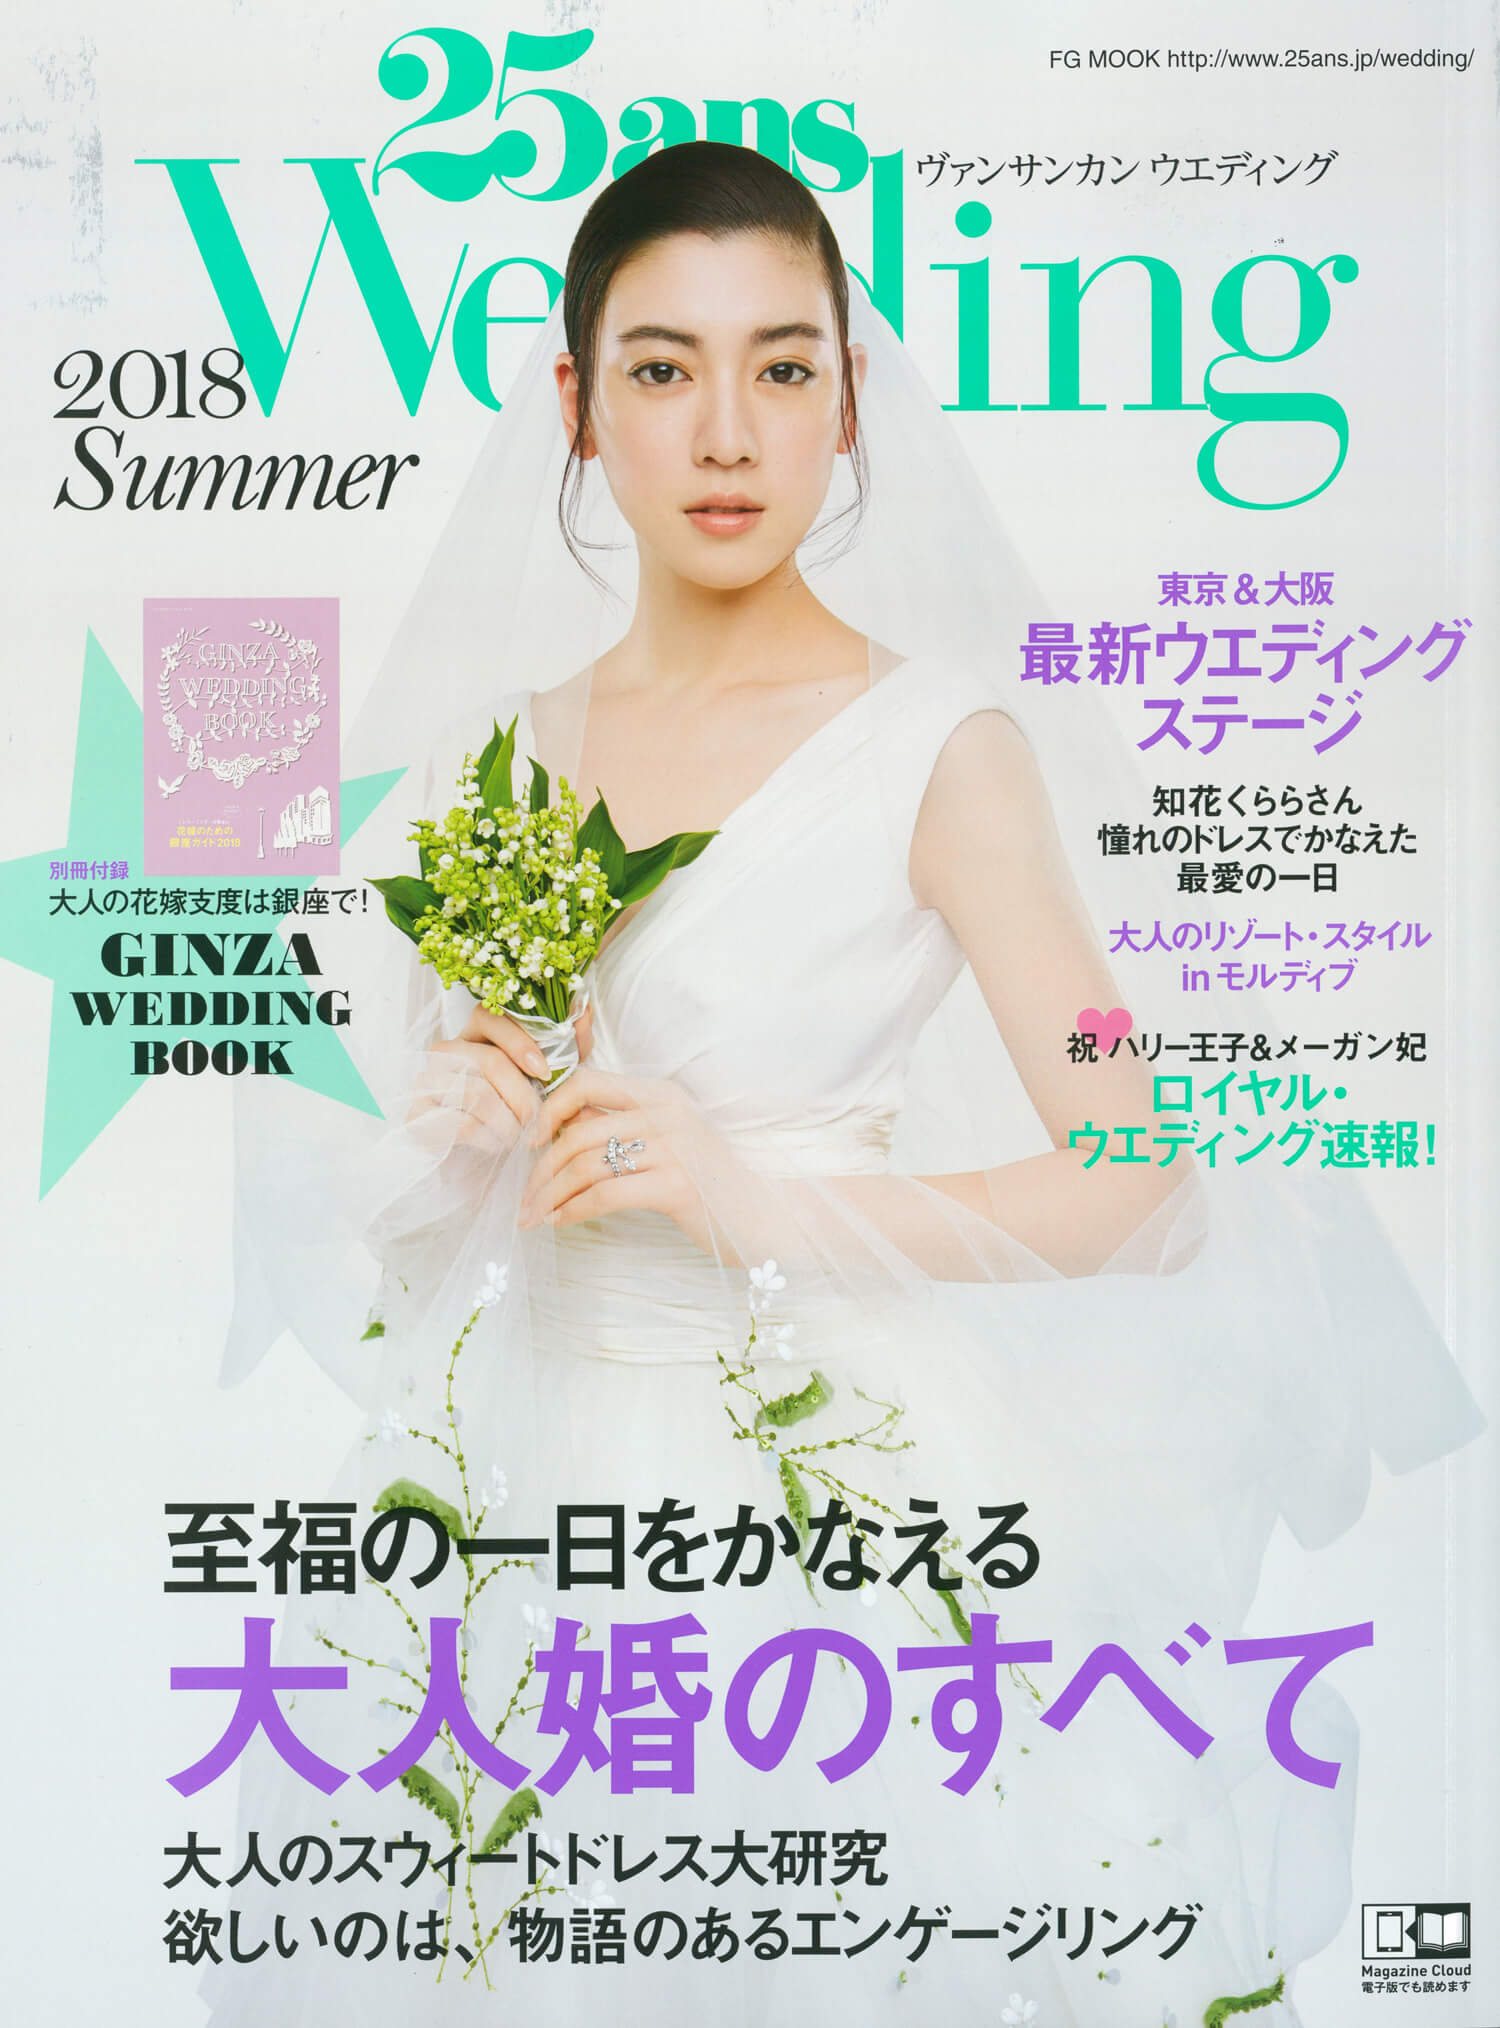 25ans Wedding 2018 Summer